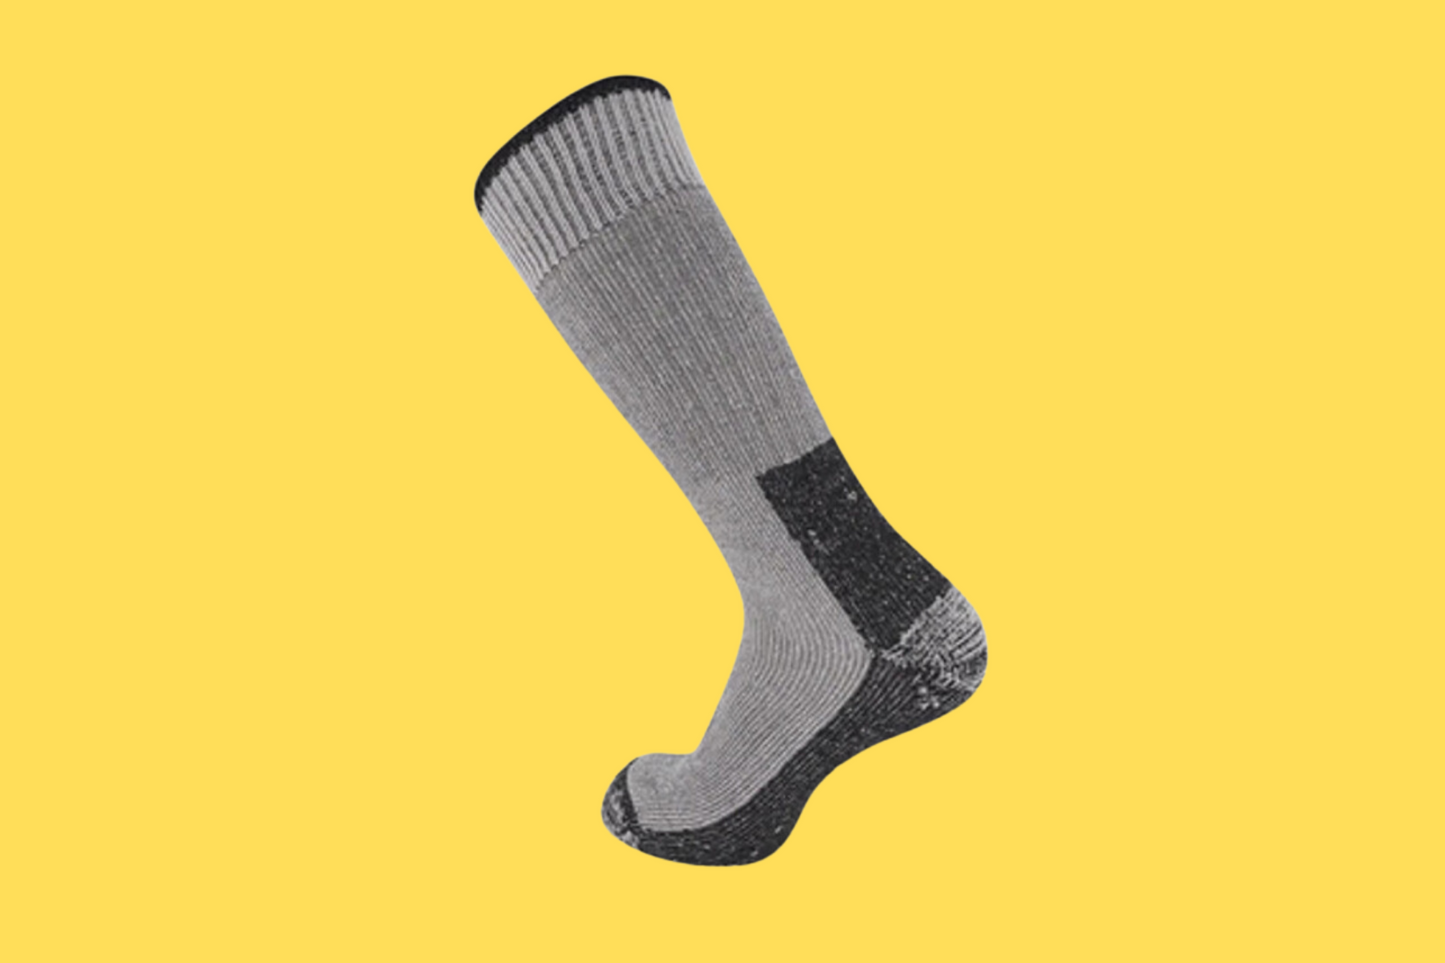 Norsewear Gumboot Socks (3pk)